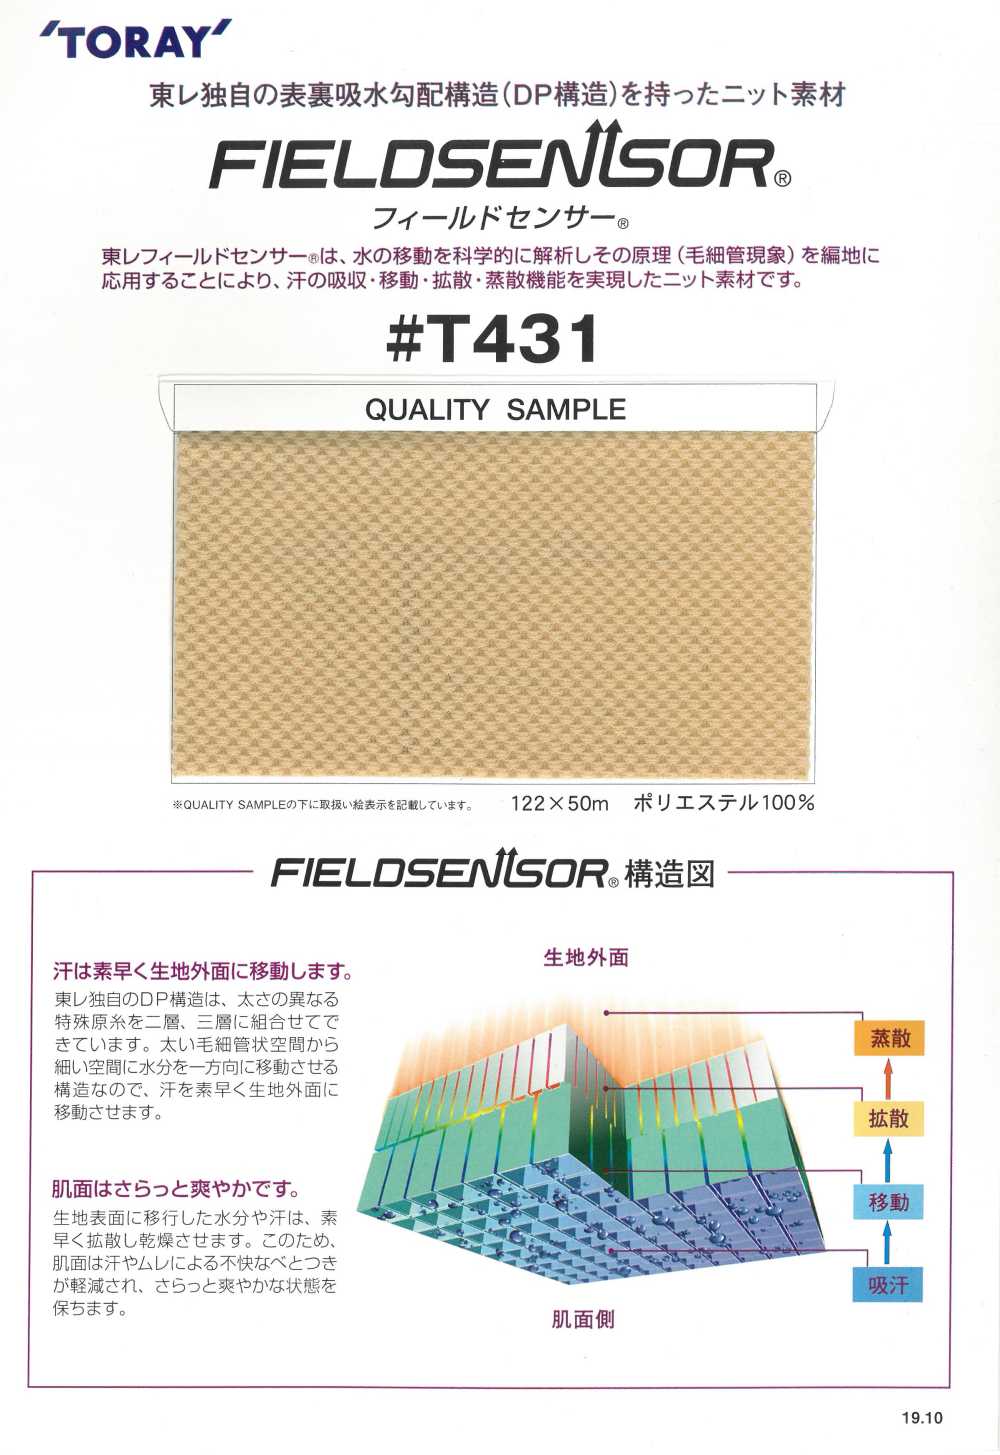 T431 Material Tejido TORAY Field Sensor® Para Ropa Interior[Fabrica Textil] Tamurakoma